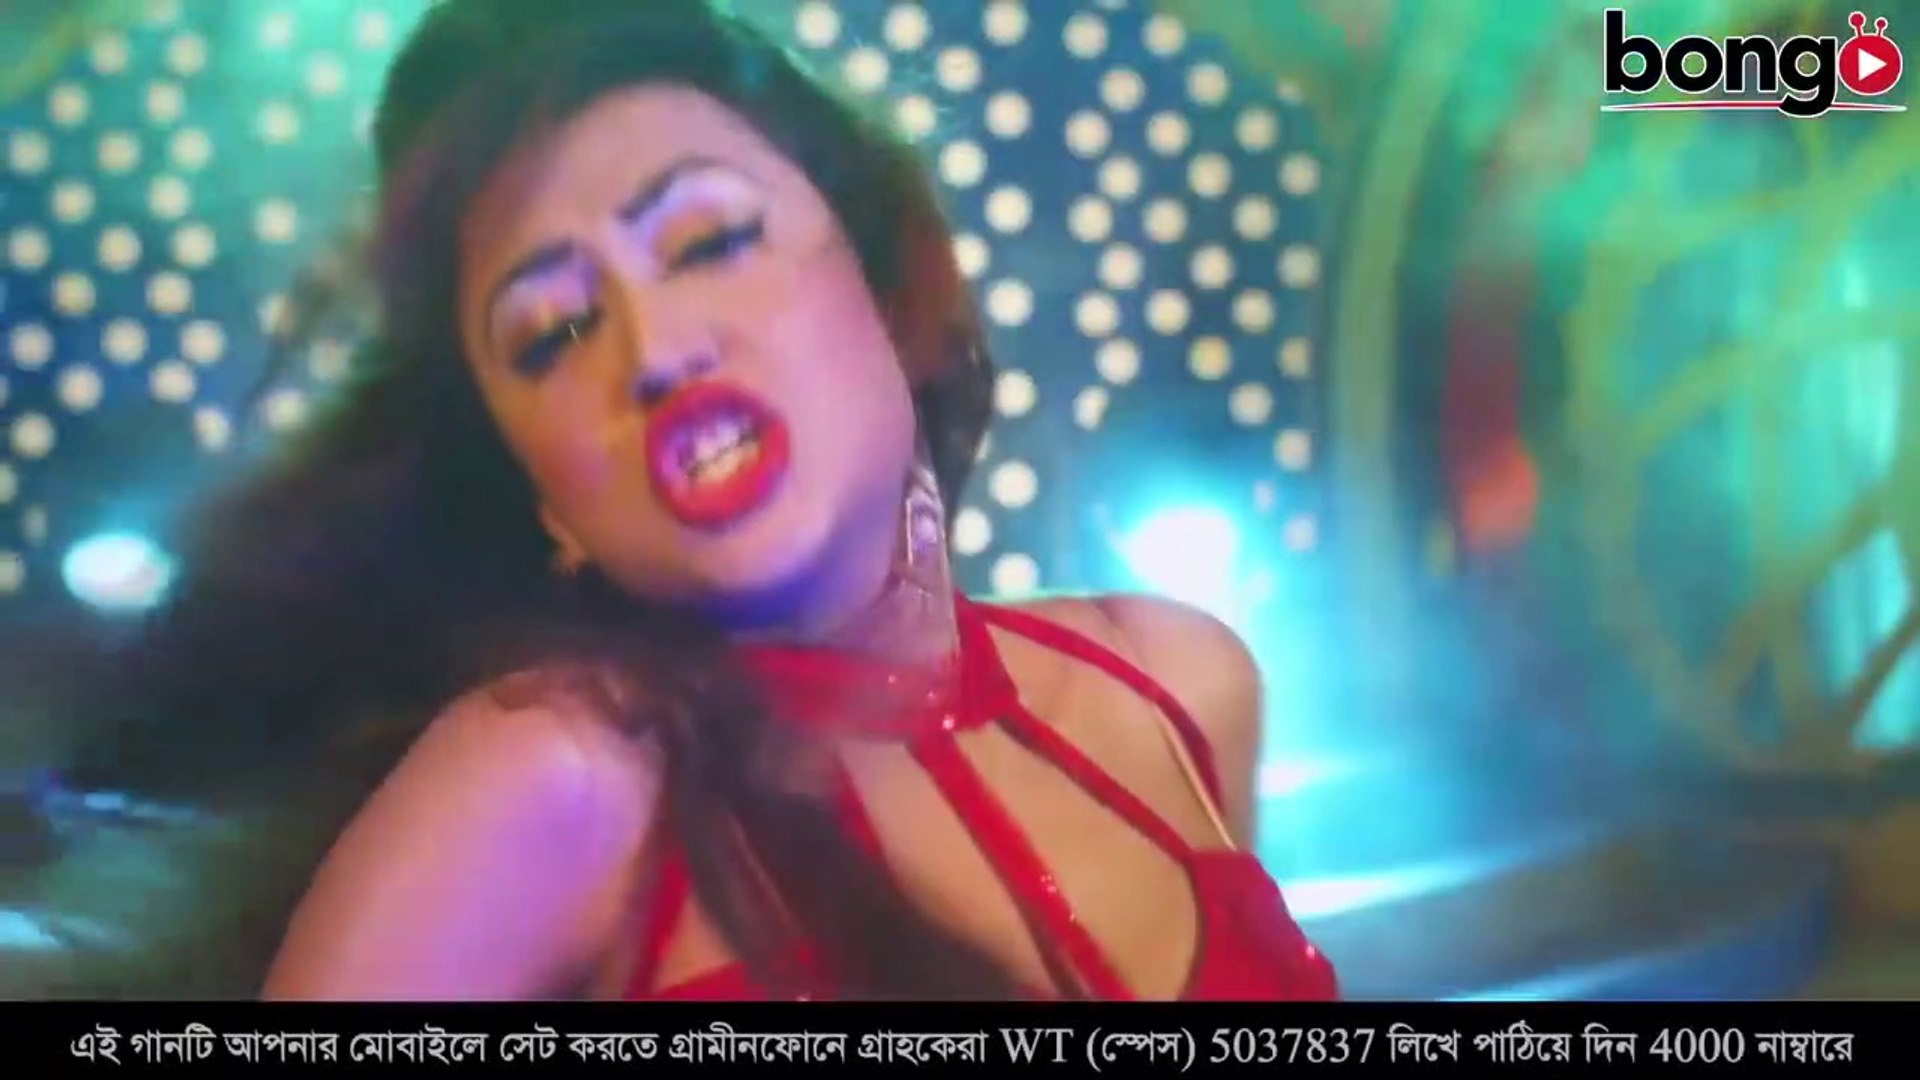 Bangladeshi Nayika Apu Biswas Sex Video - Ami Dekhte Lale Lal - à¦†à¦®à¦¿ à¦¦à§‡à¦–à¦¤à§‡ à¦²à¦¾à¦²à§‡ à¦²à¦¾à¦² - Love Marriage Movie Song -  Shakib Khan, Apu Biswas - video Dailymotion